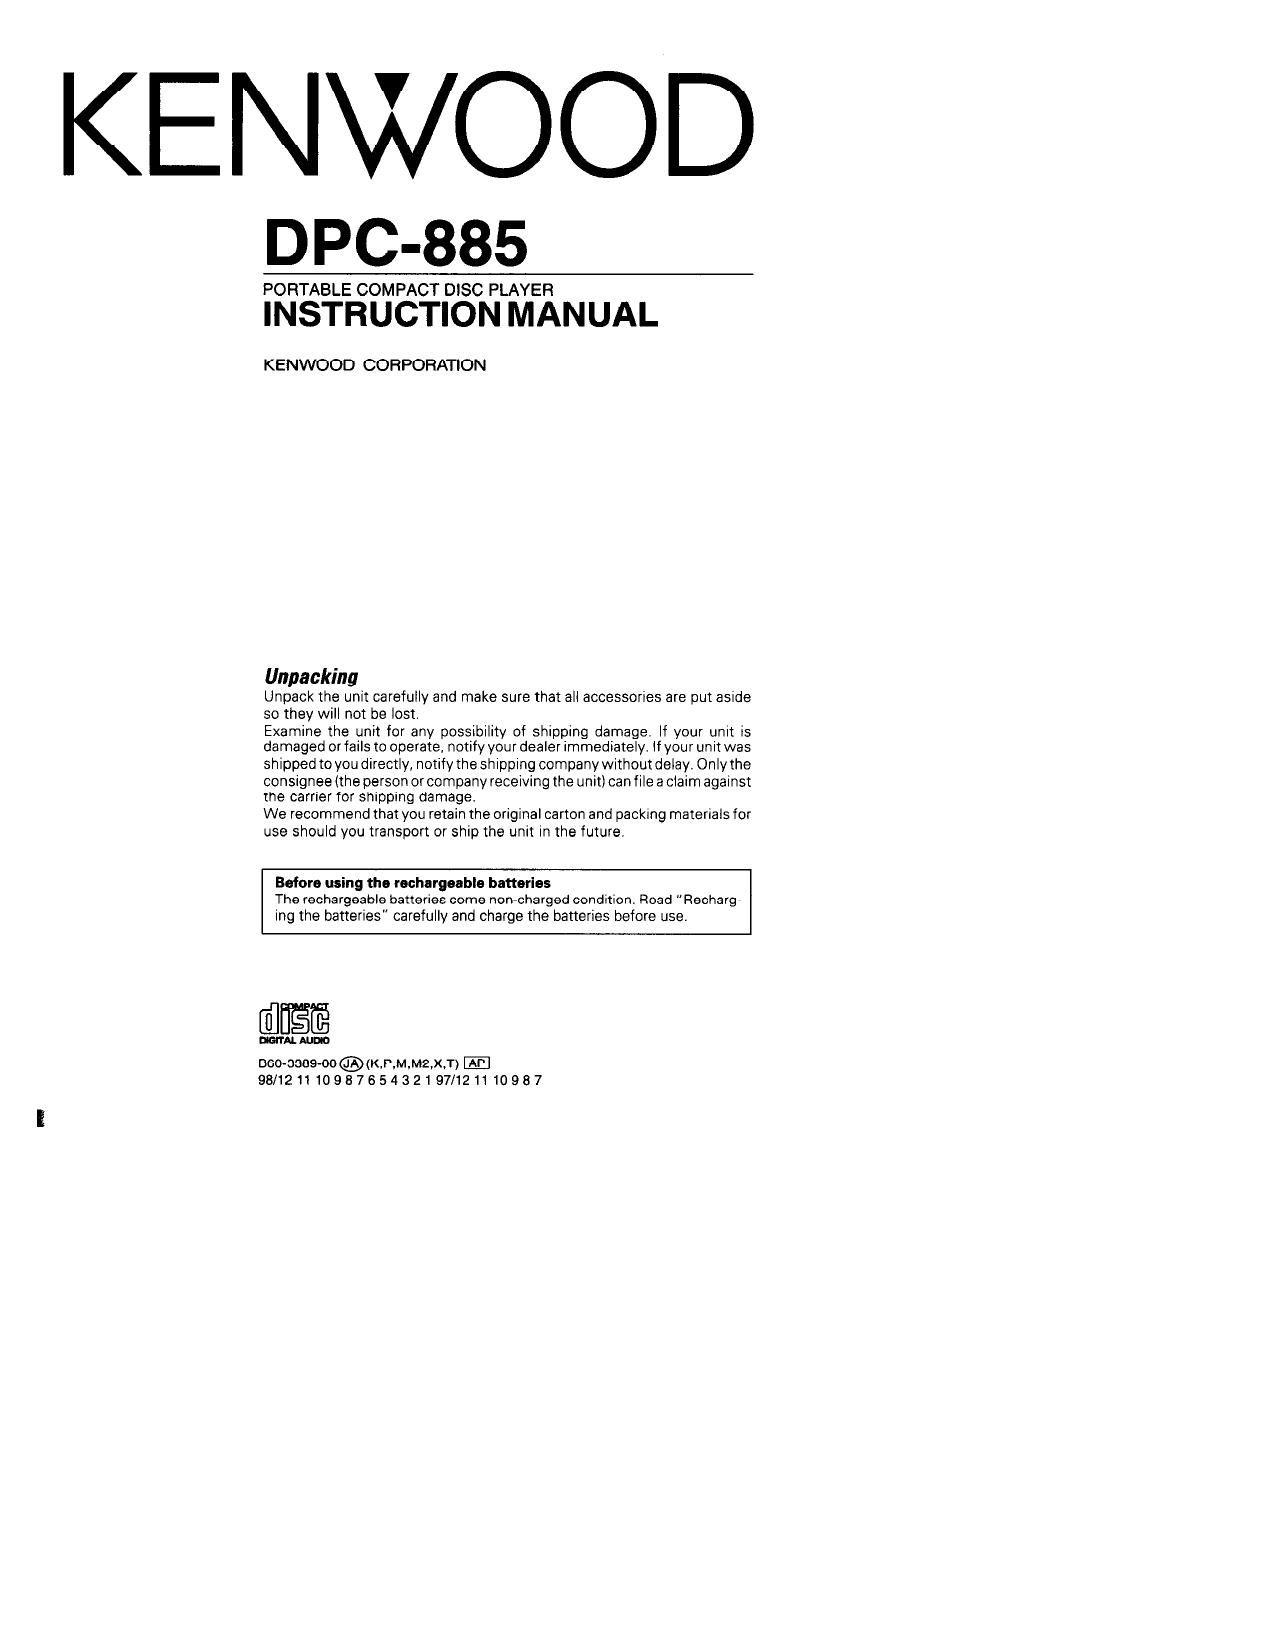 Kenwood DPC 885 Owners Manual